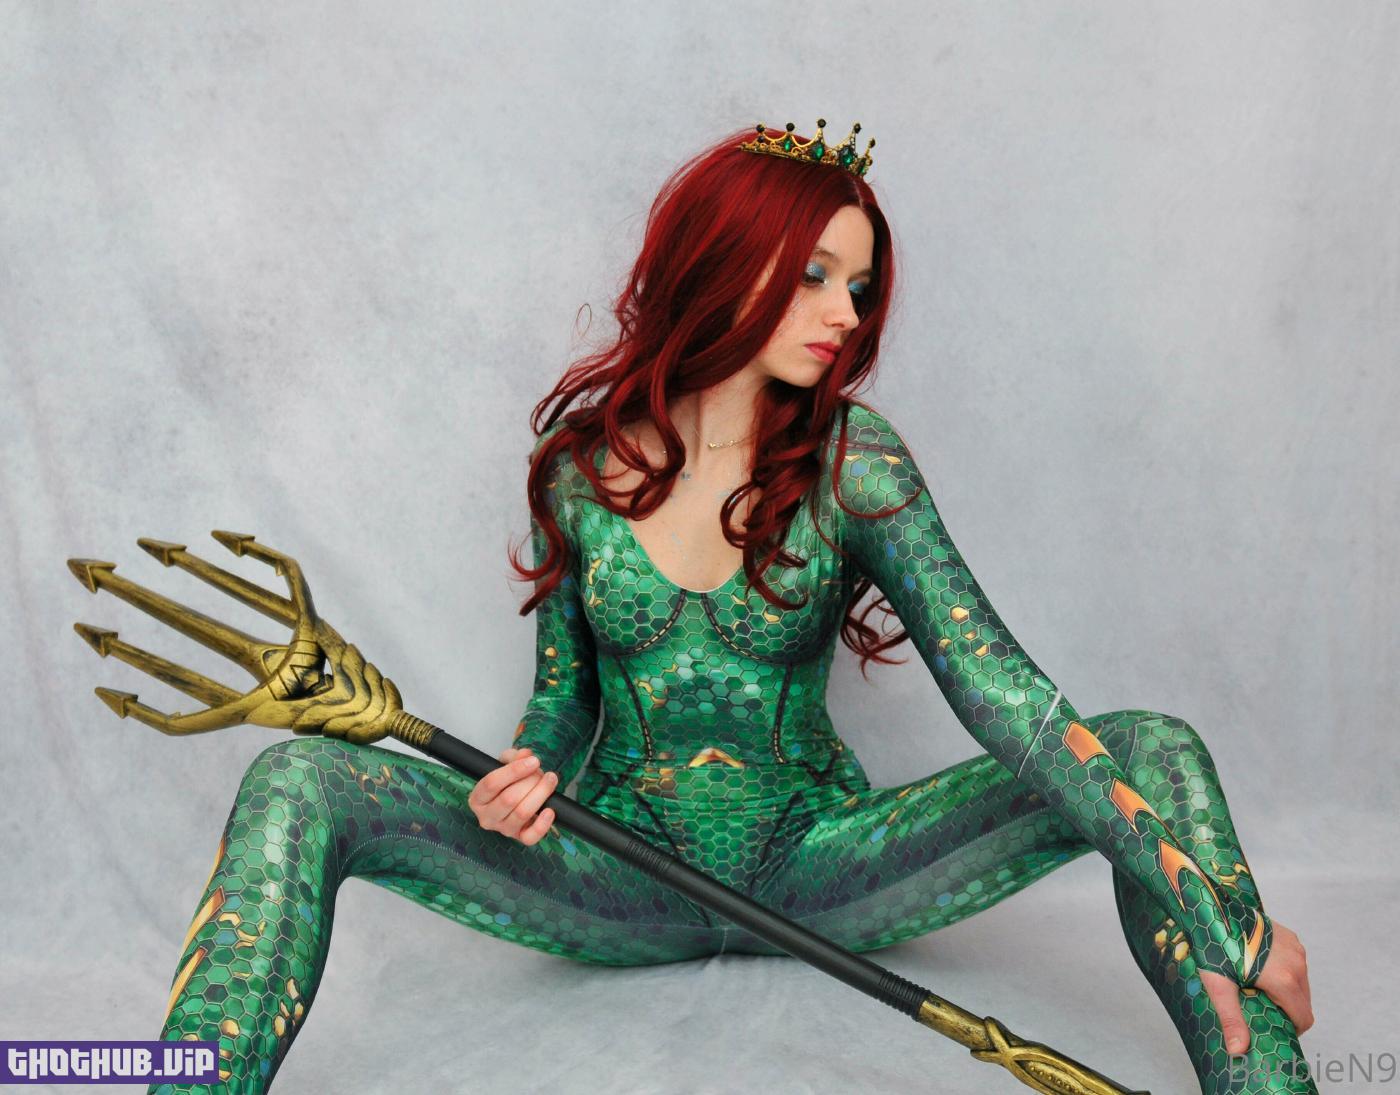 1663057411 603 BarbieN9 Aquaman Queen Mera Cosplay Onlyfans Set Leaked